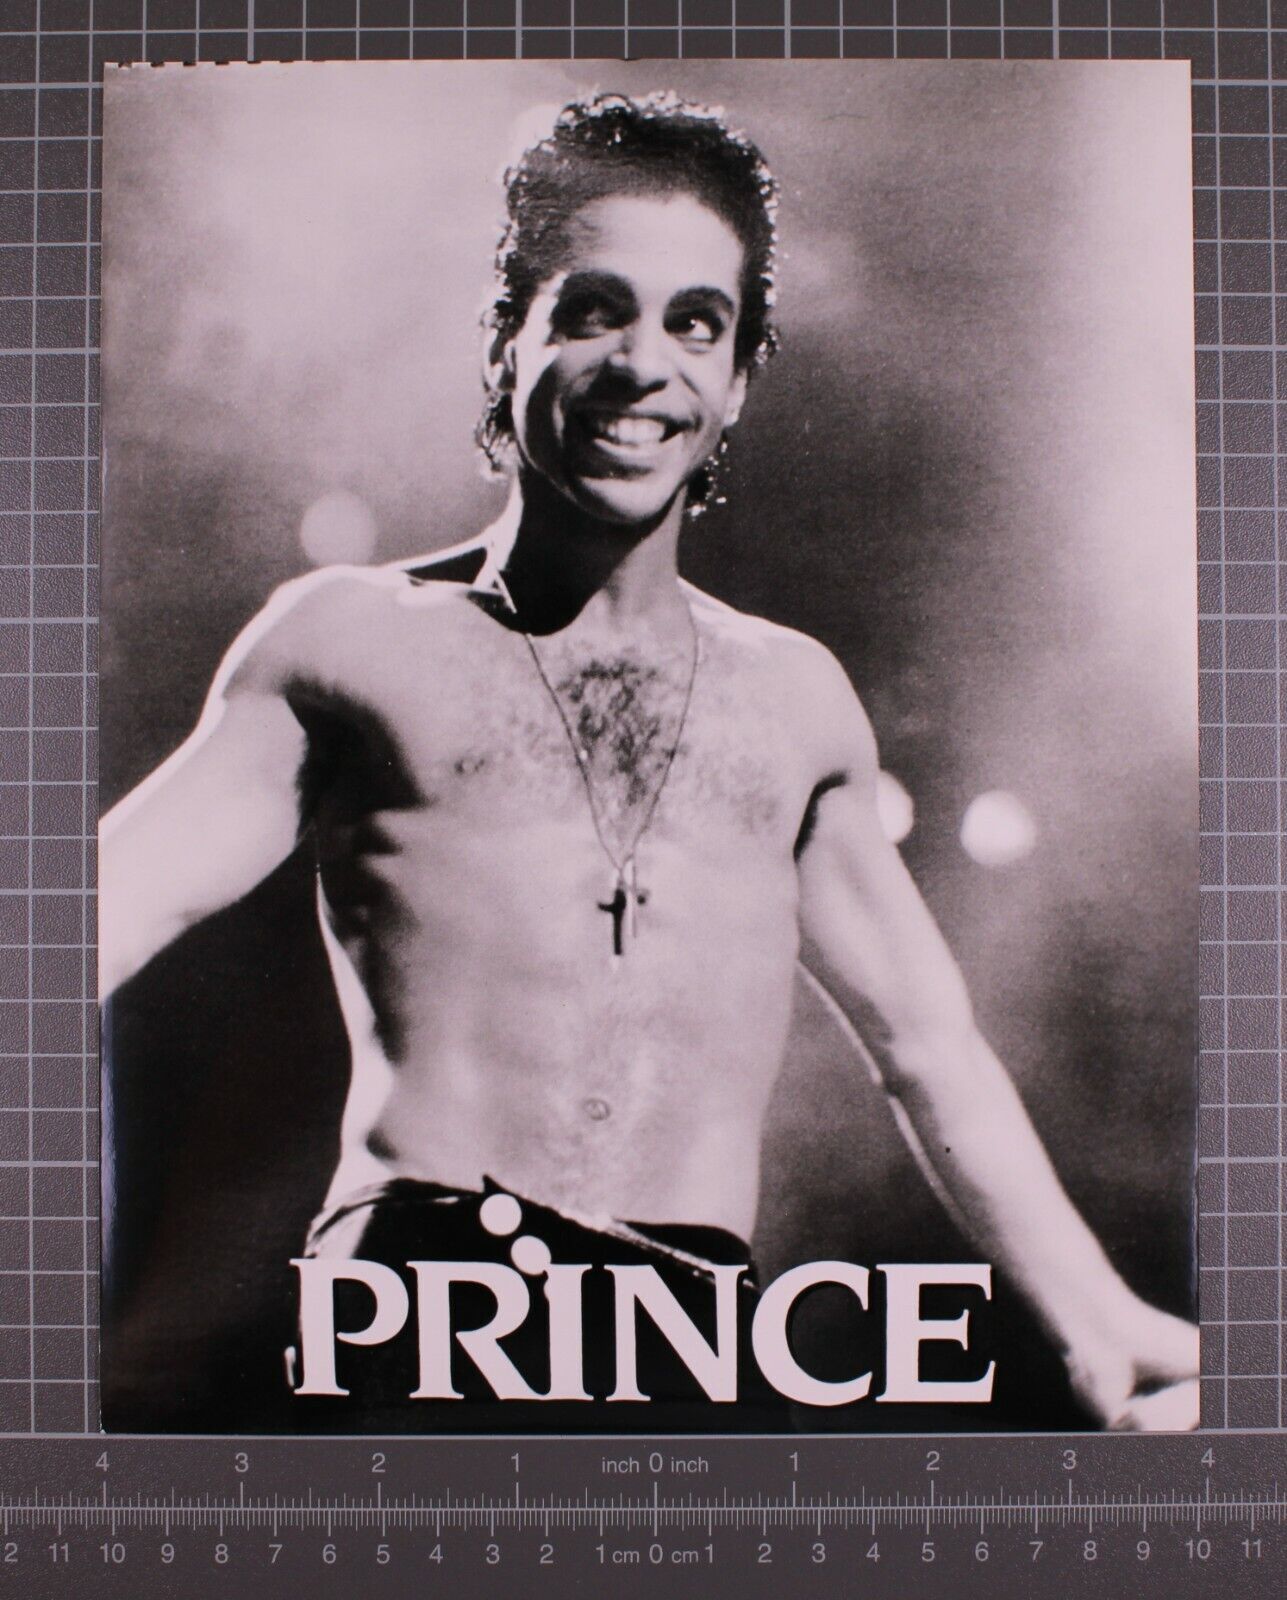 Prince Photograph Original Vintage Black And White Promotion Circa Mid 1980\'s 